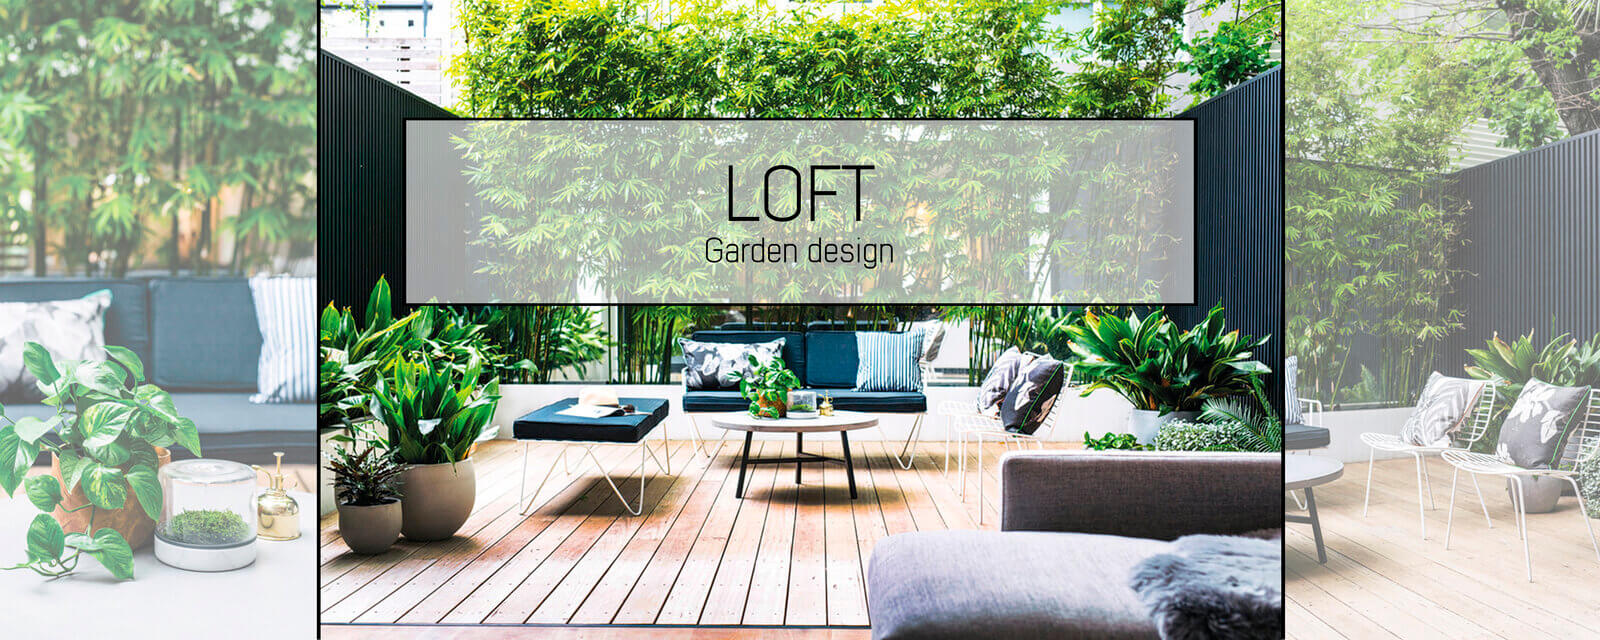 Loft Garden Design